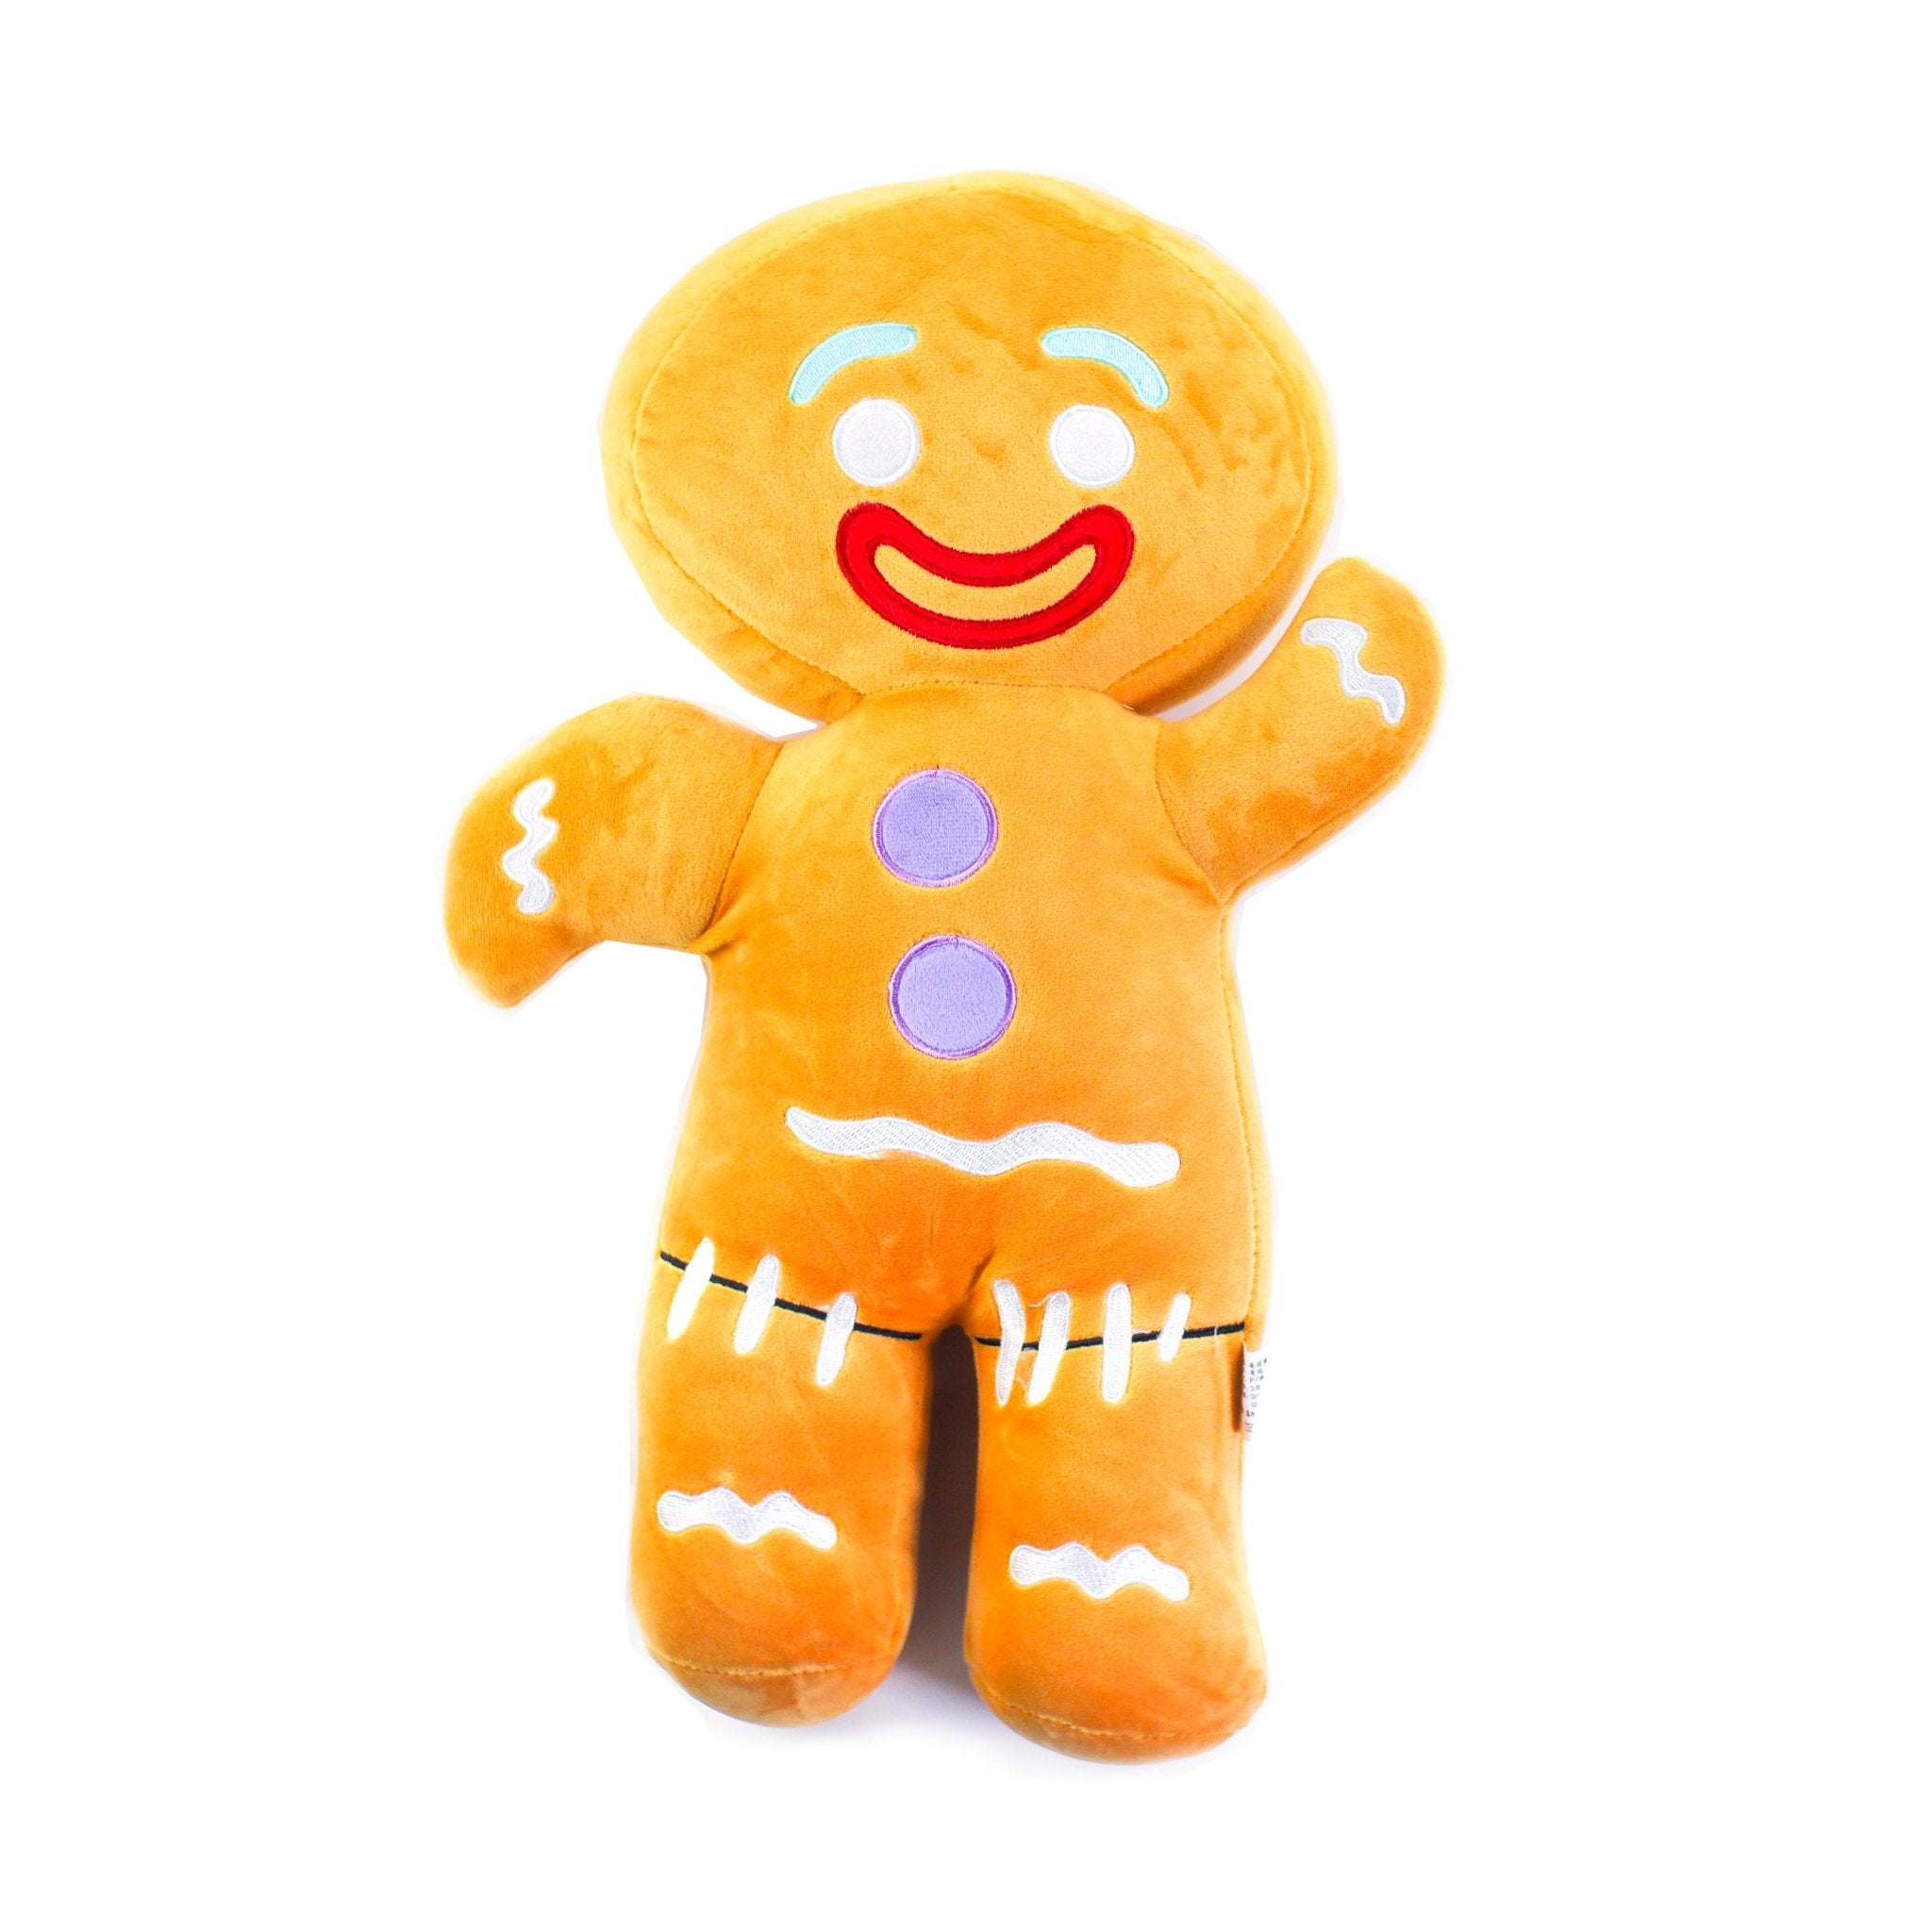 Gingerbread man Stuff Soft Doll - MODA FLORA Santa's Workshop